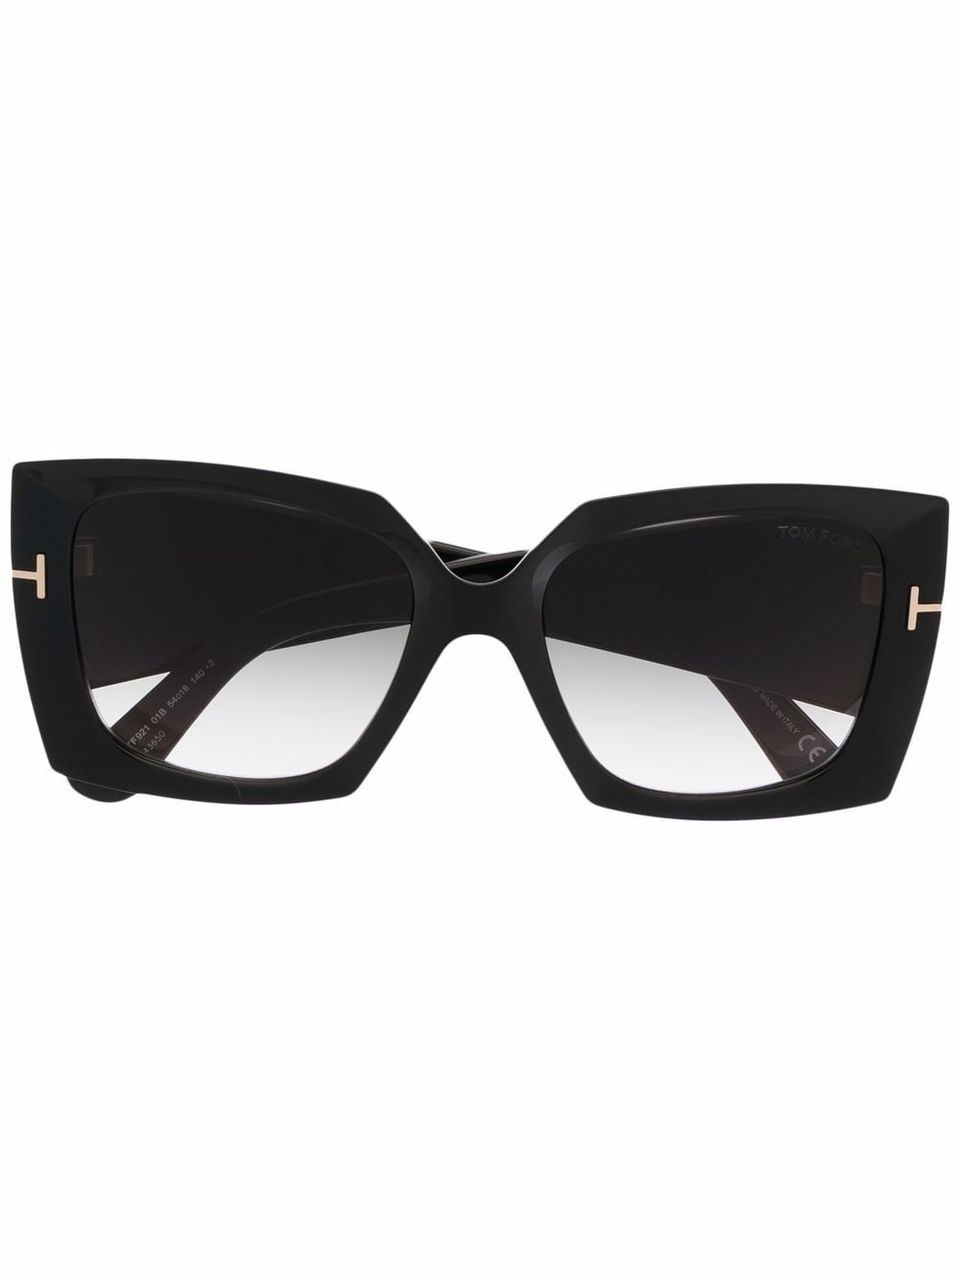 Tom Ford Eyewear Jacquetta square sunglasses - Black - Compare prices